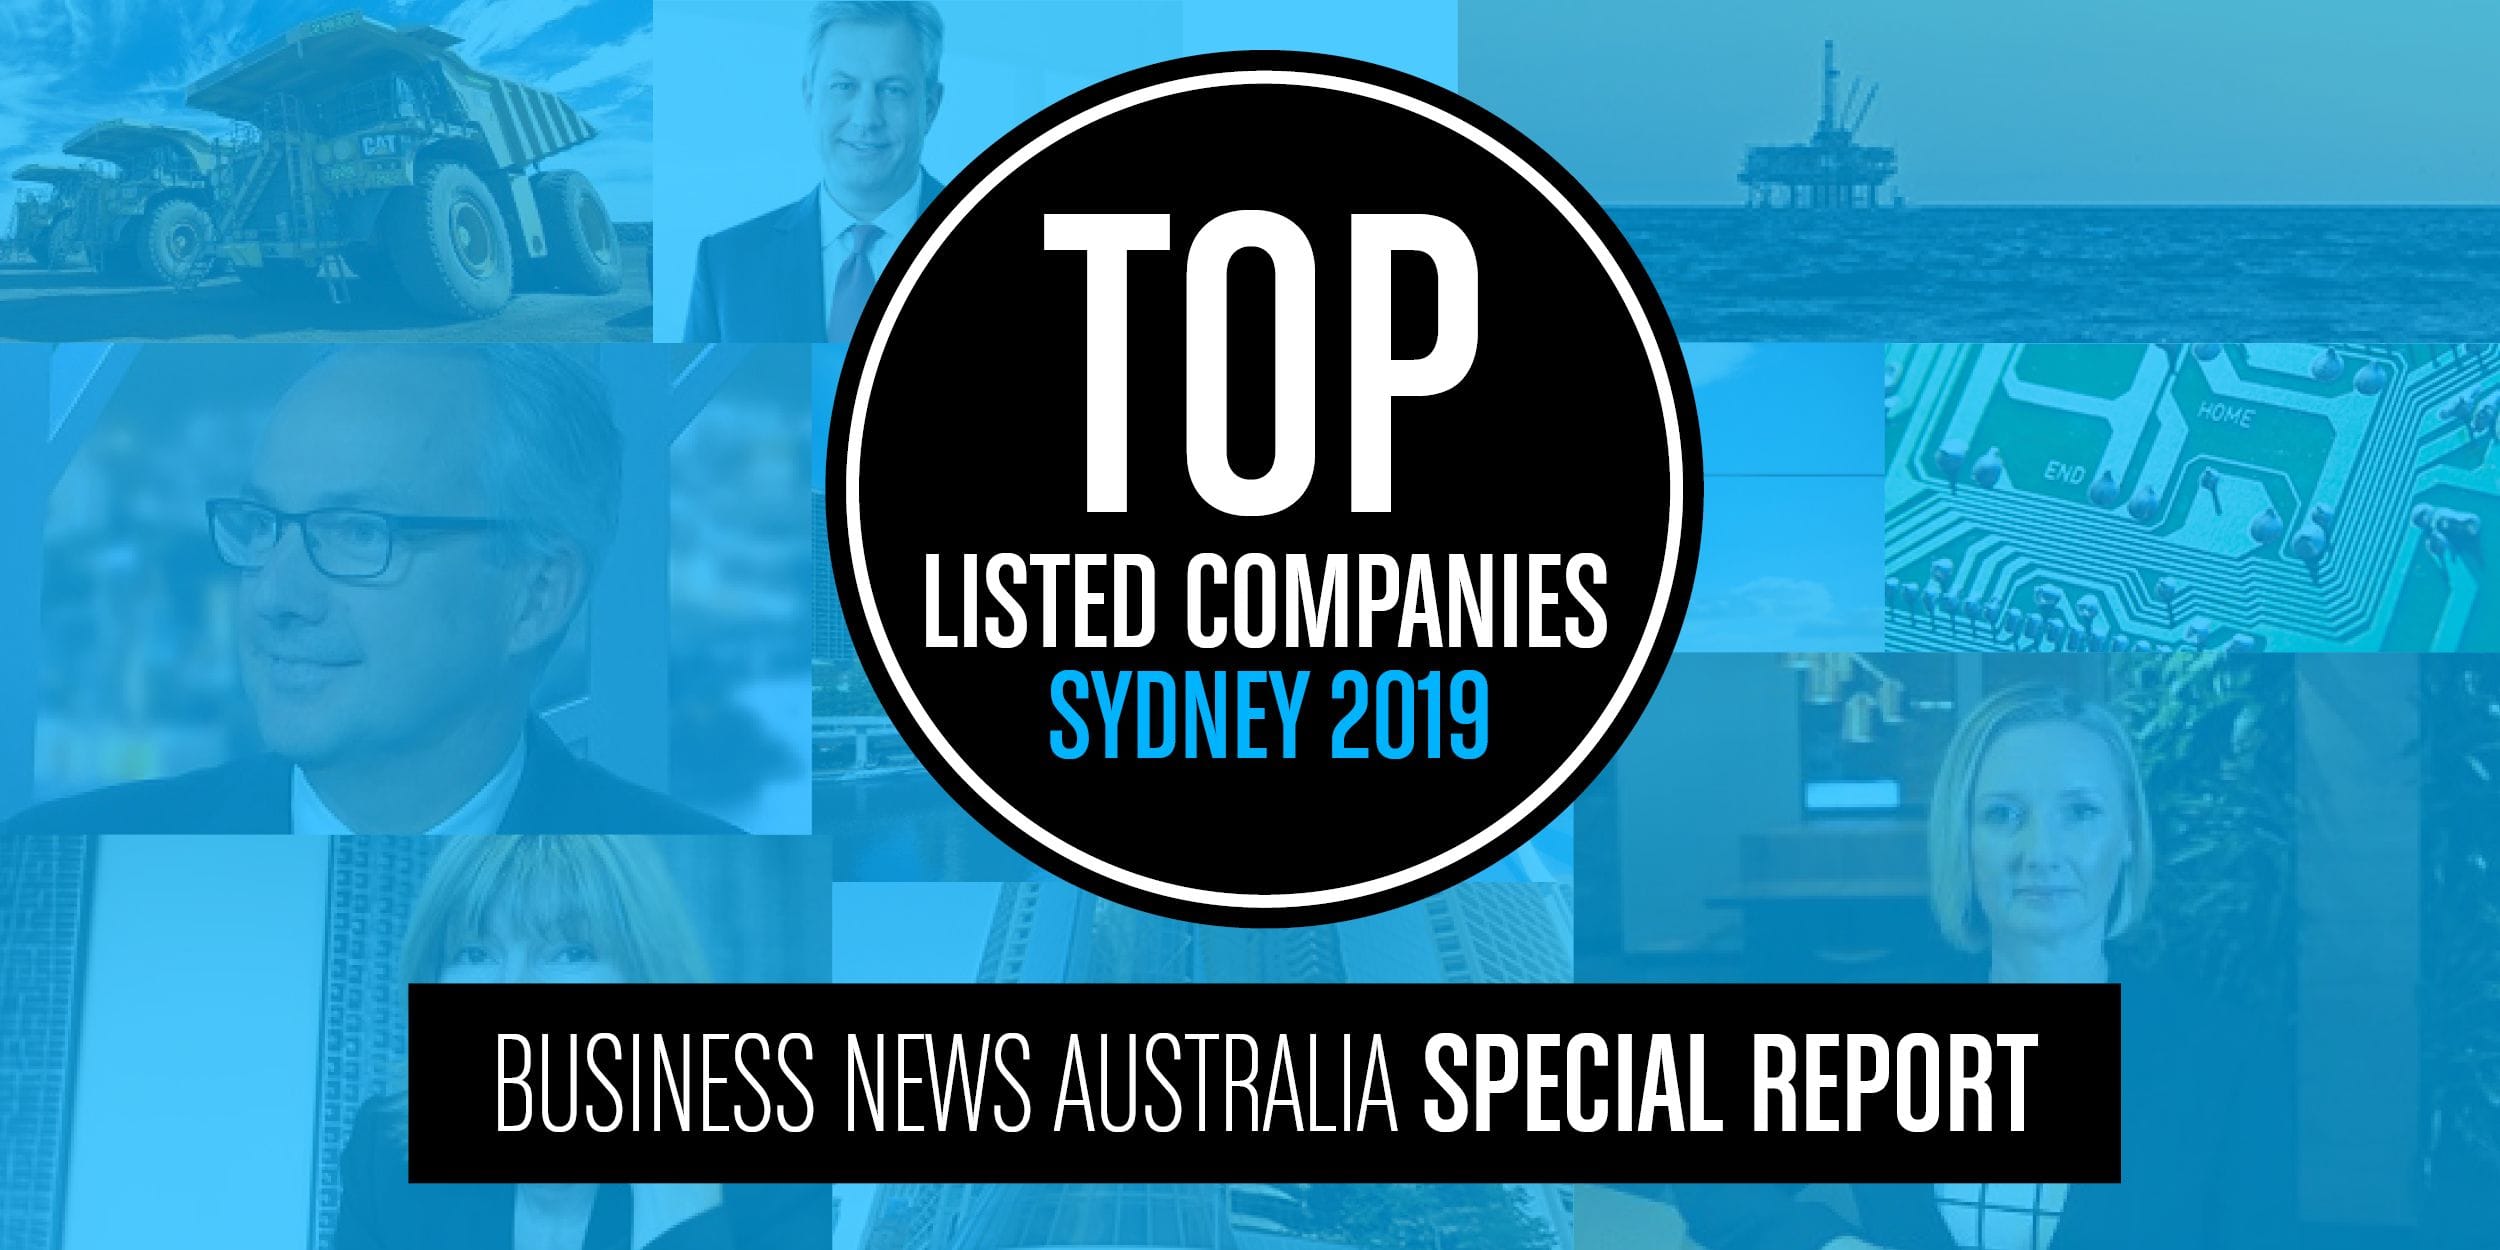 Sydney Top Companies 2019 | Business News Australia